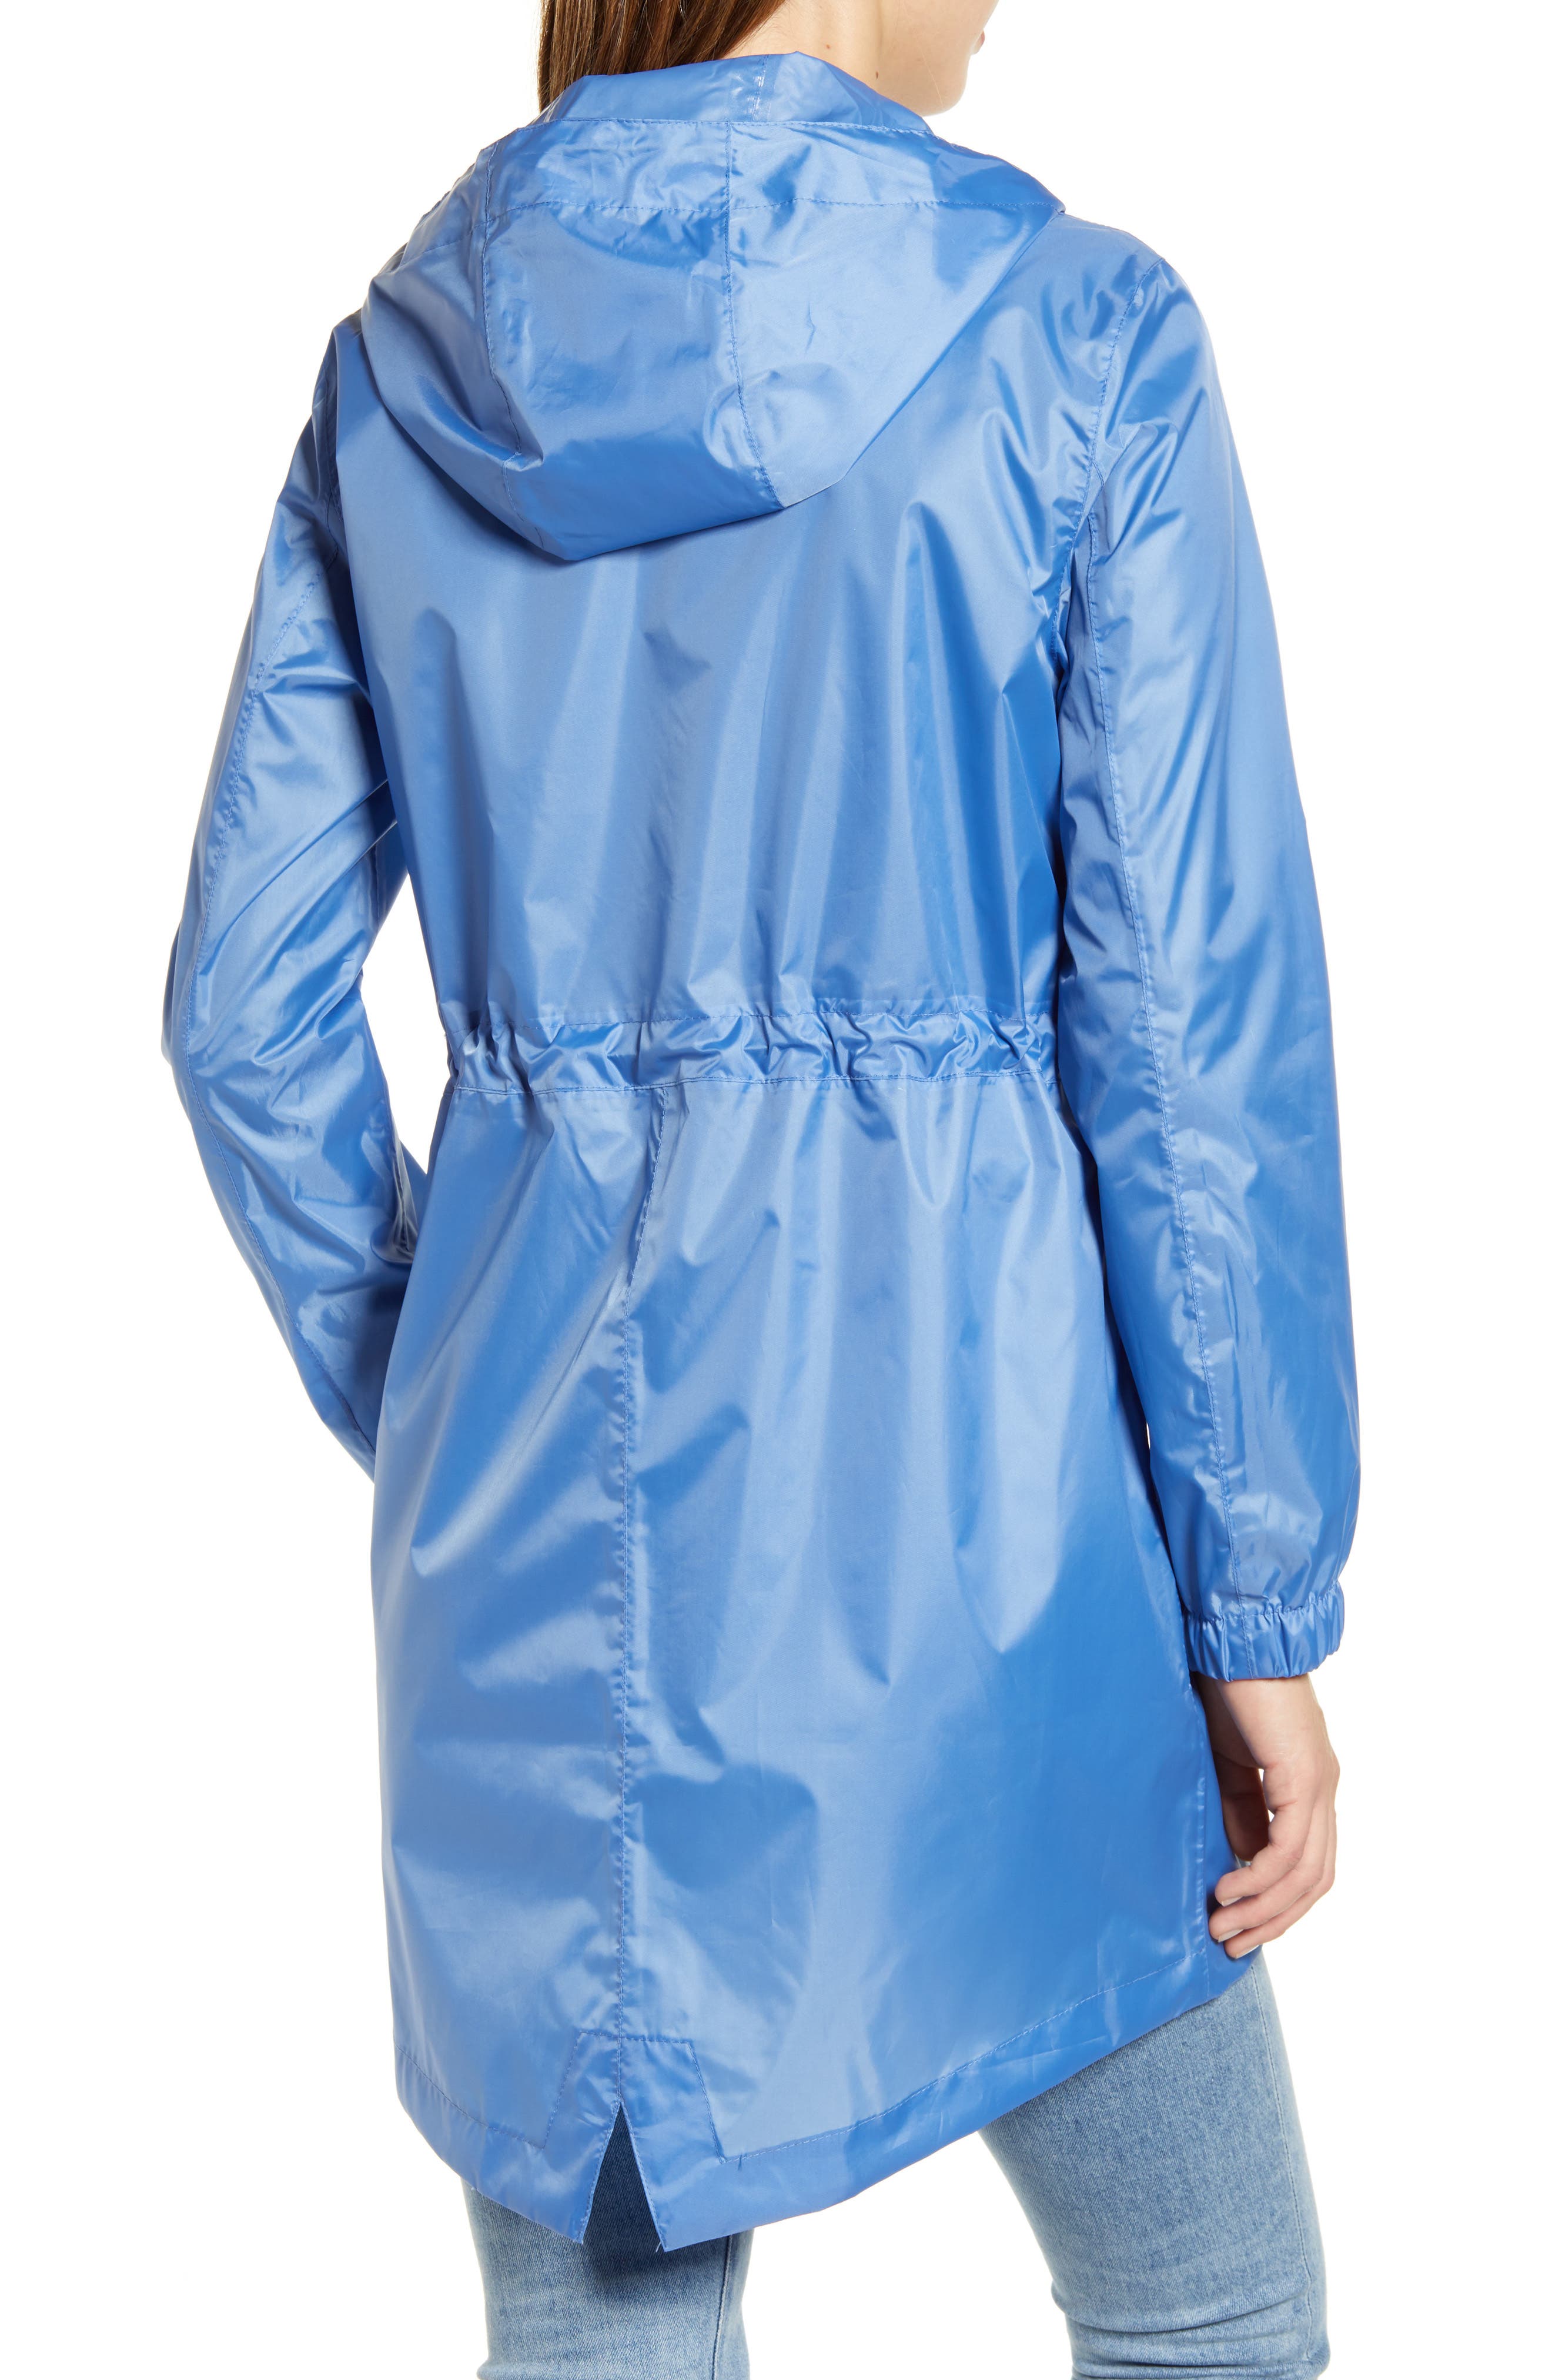 Joules | Waterproof Packaway Raincoat | HauteLook